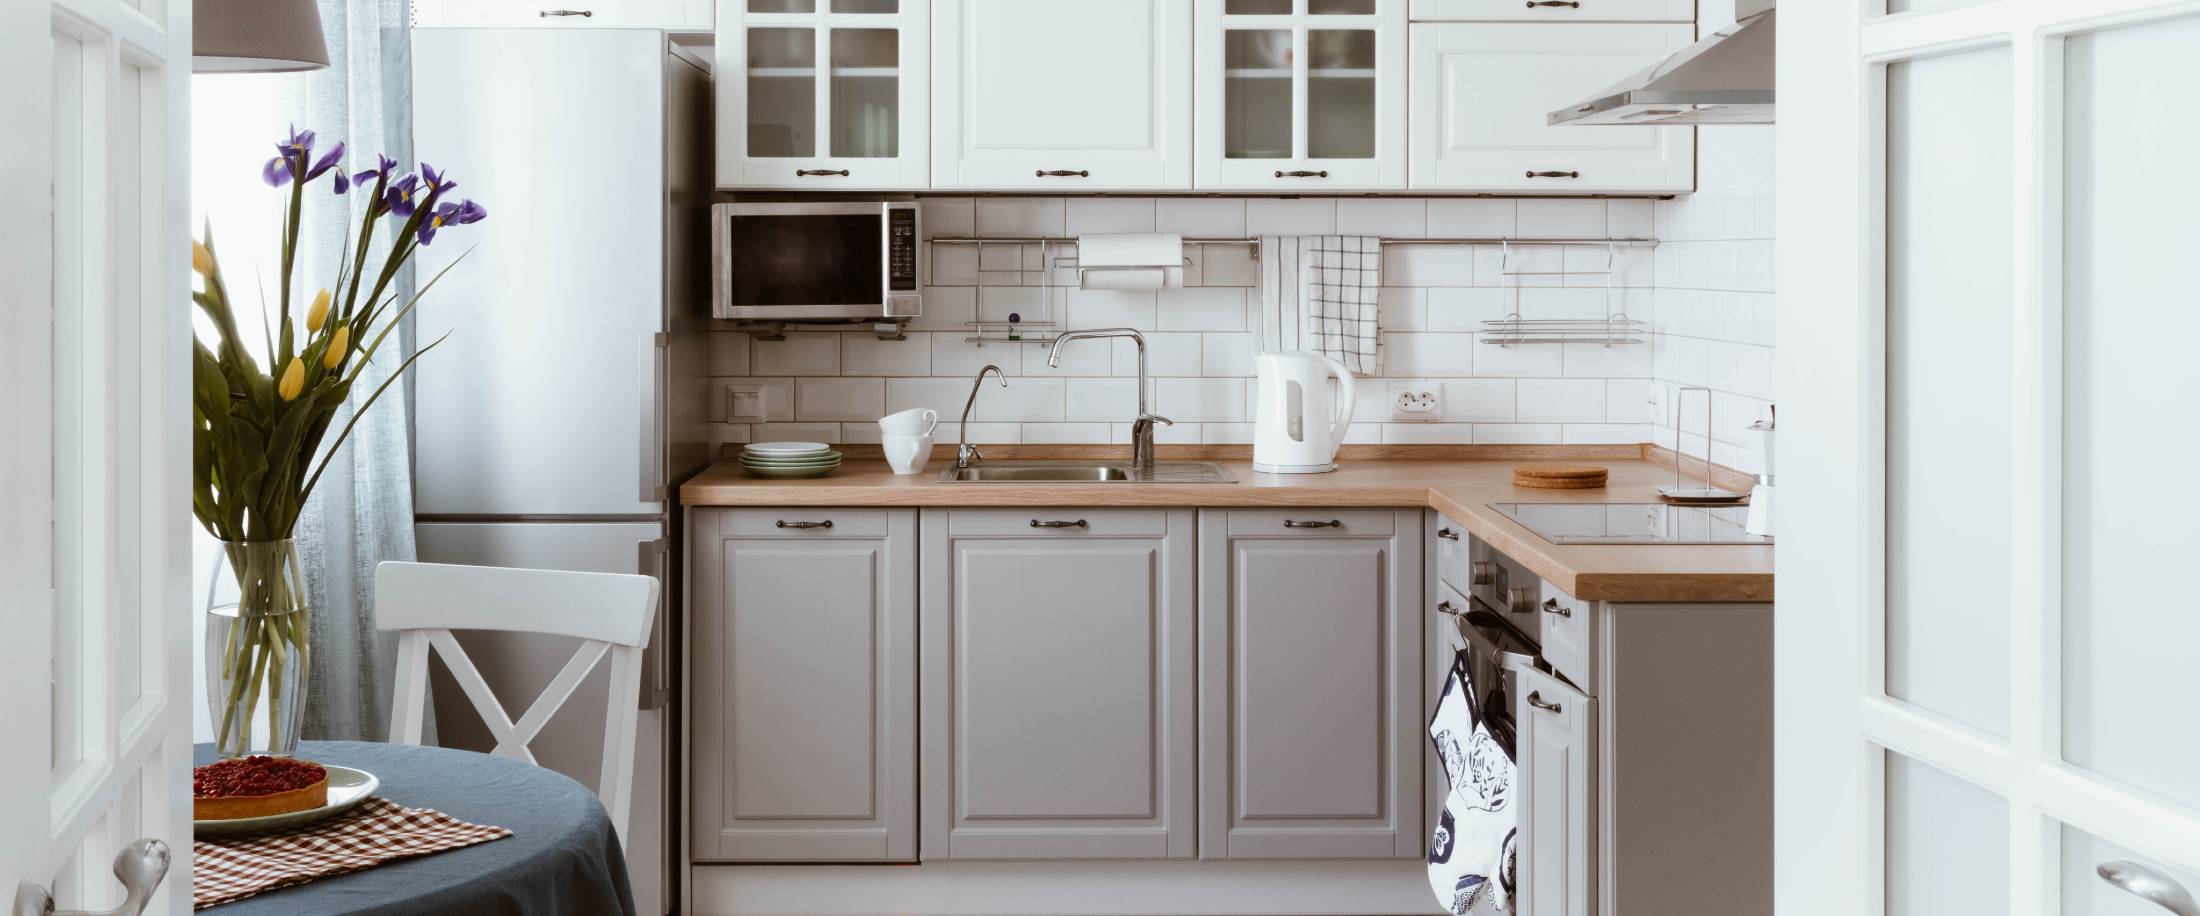 Top 12 Kitchen Island Storage Ideas: What To Store & How To Organize   Small kitchen storage, Kitchen island storage, Small apartment design